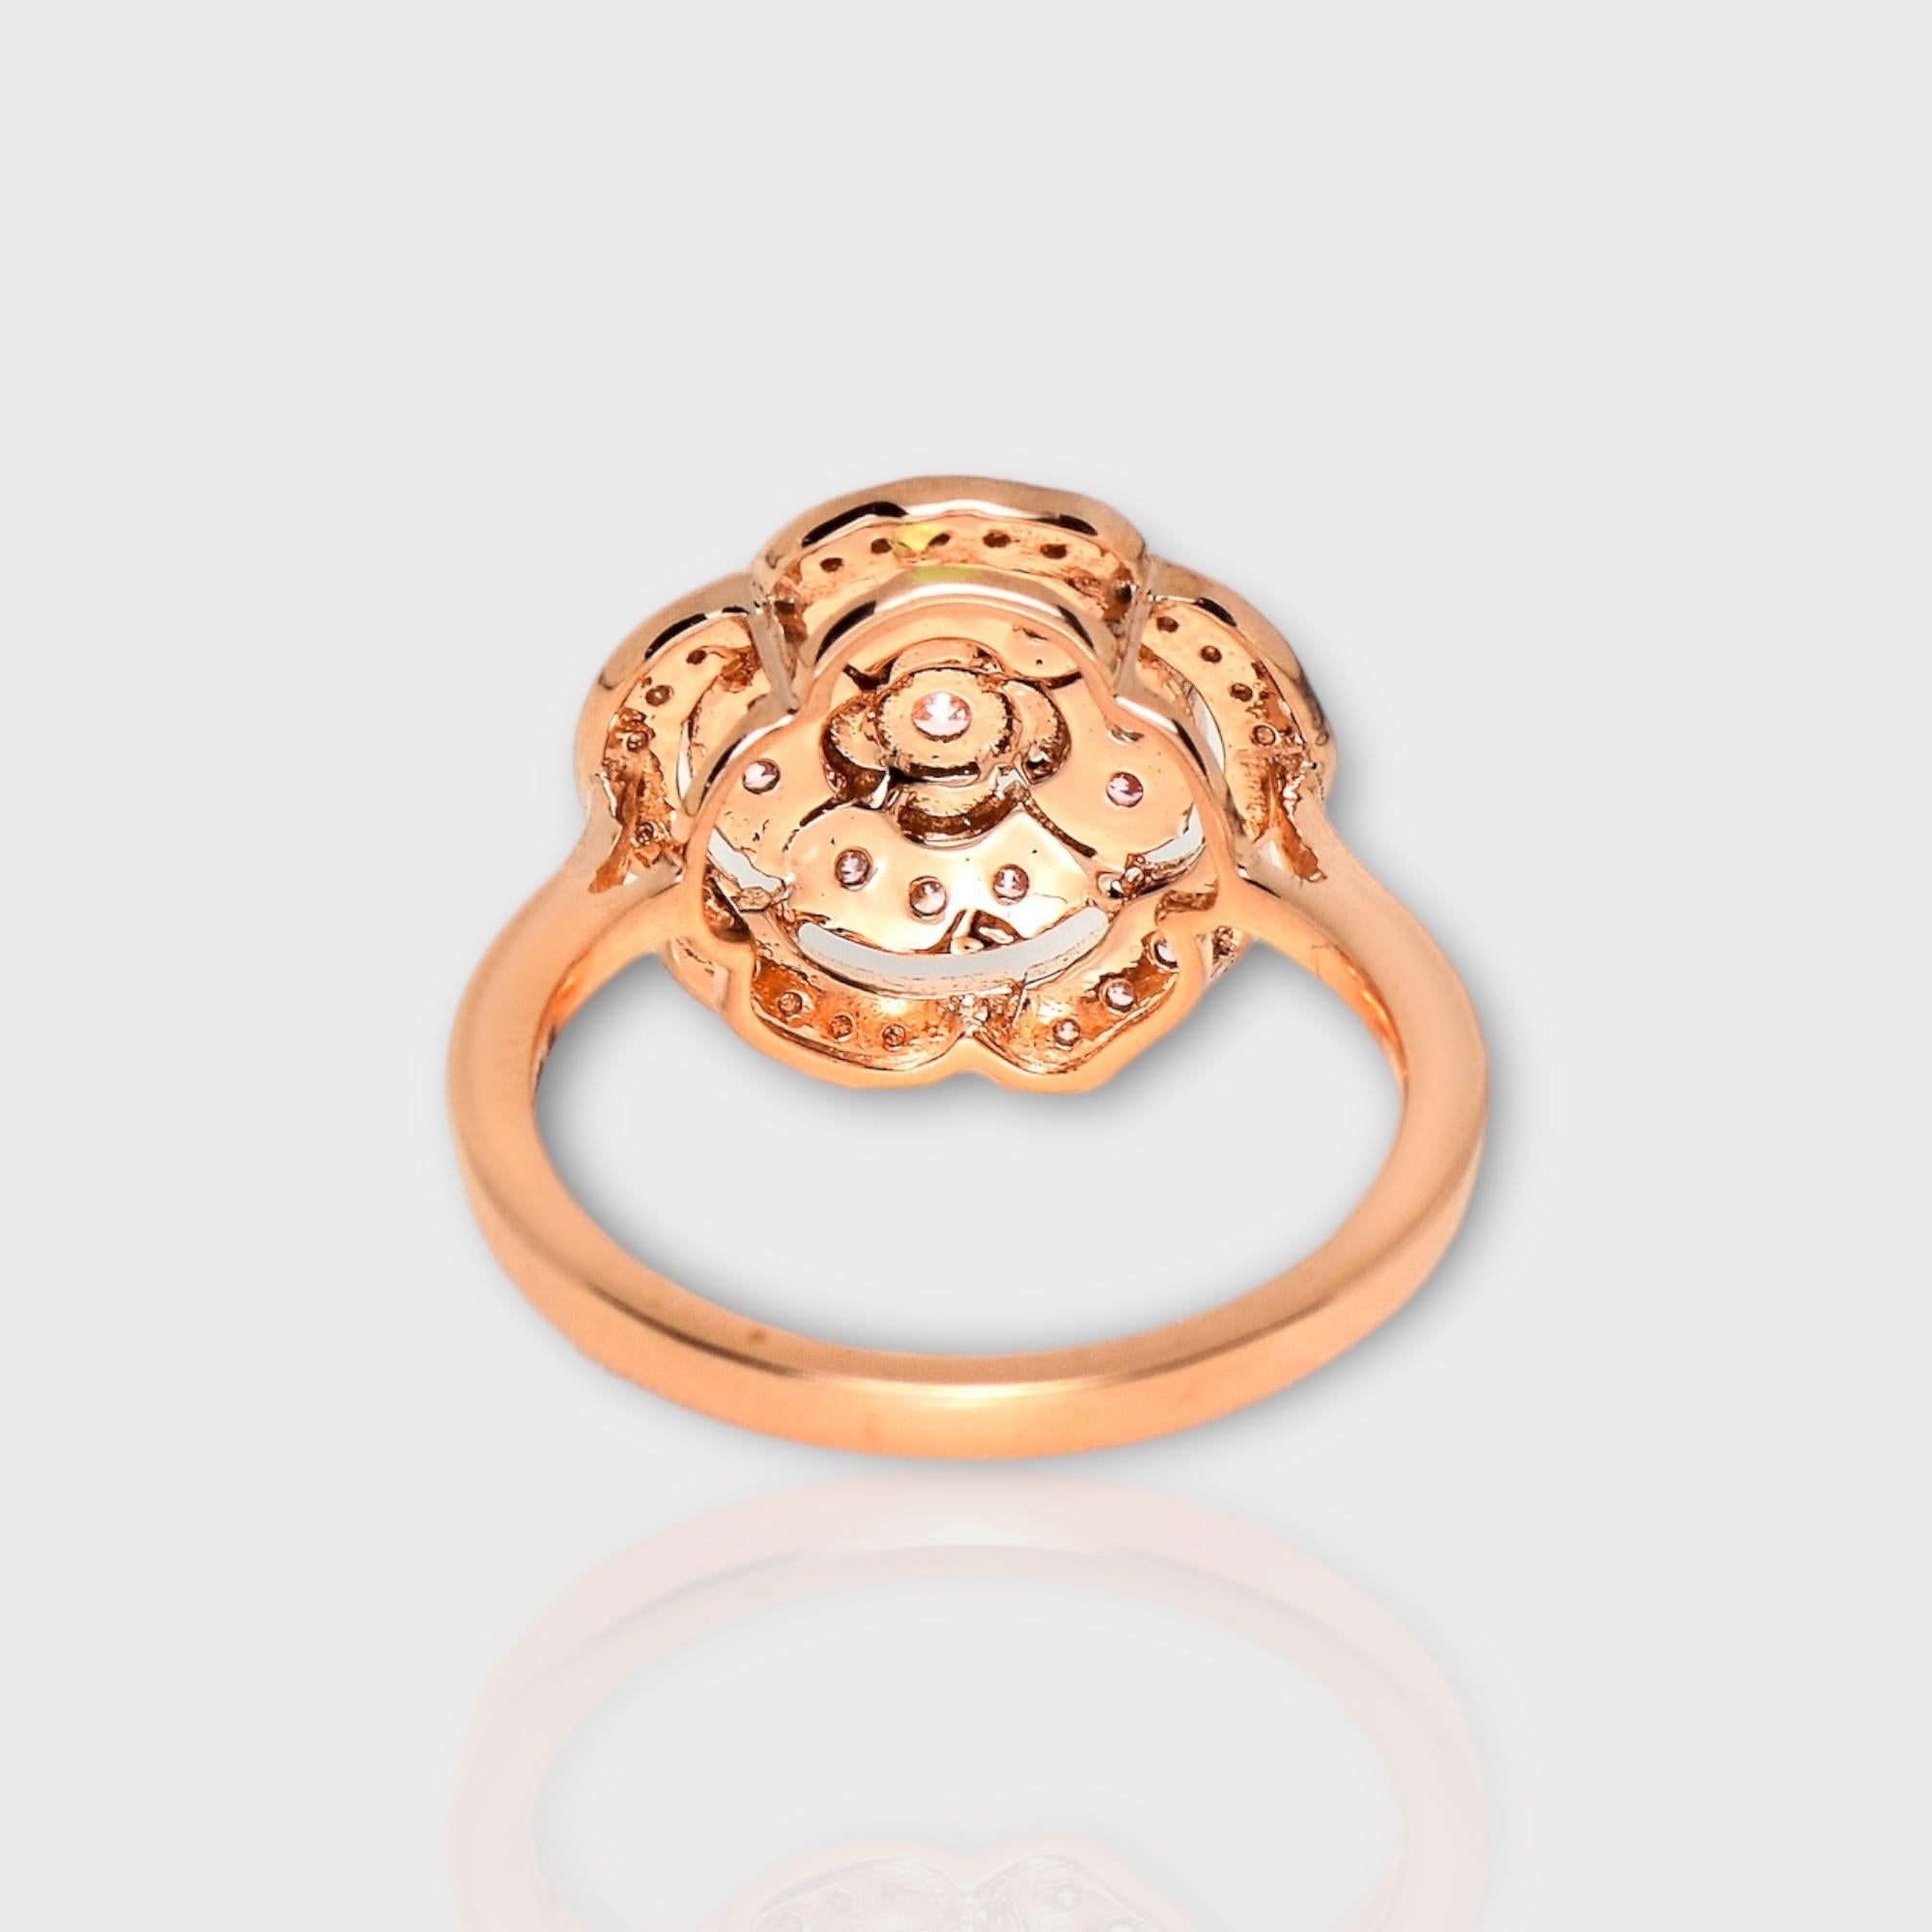 IGI 14K 0.40 ct Natural Pink Diamonds Rose Design Antique Art Deco Ring For Sale 2